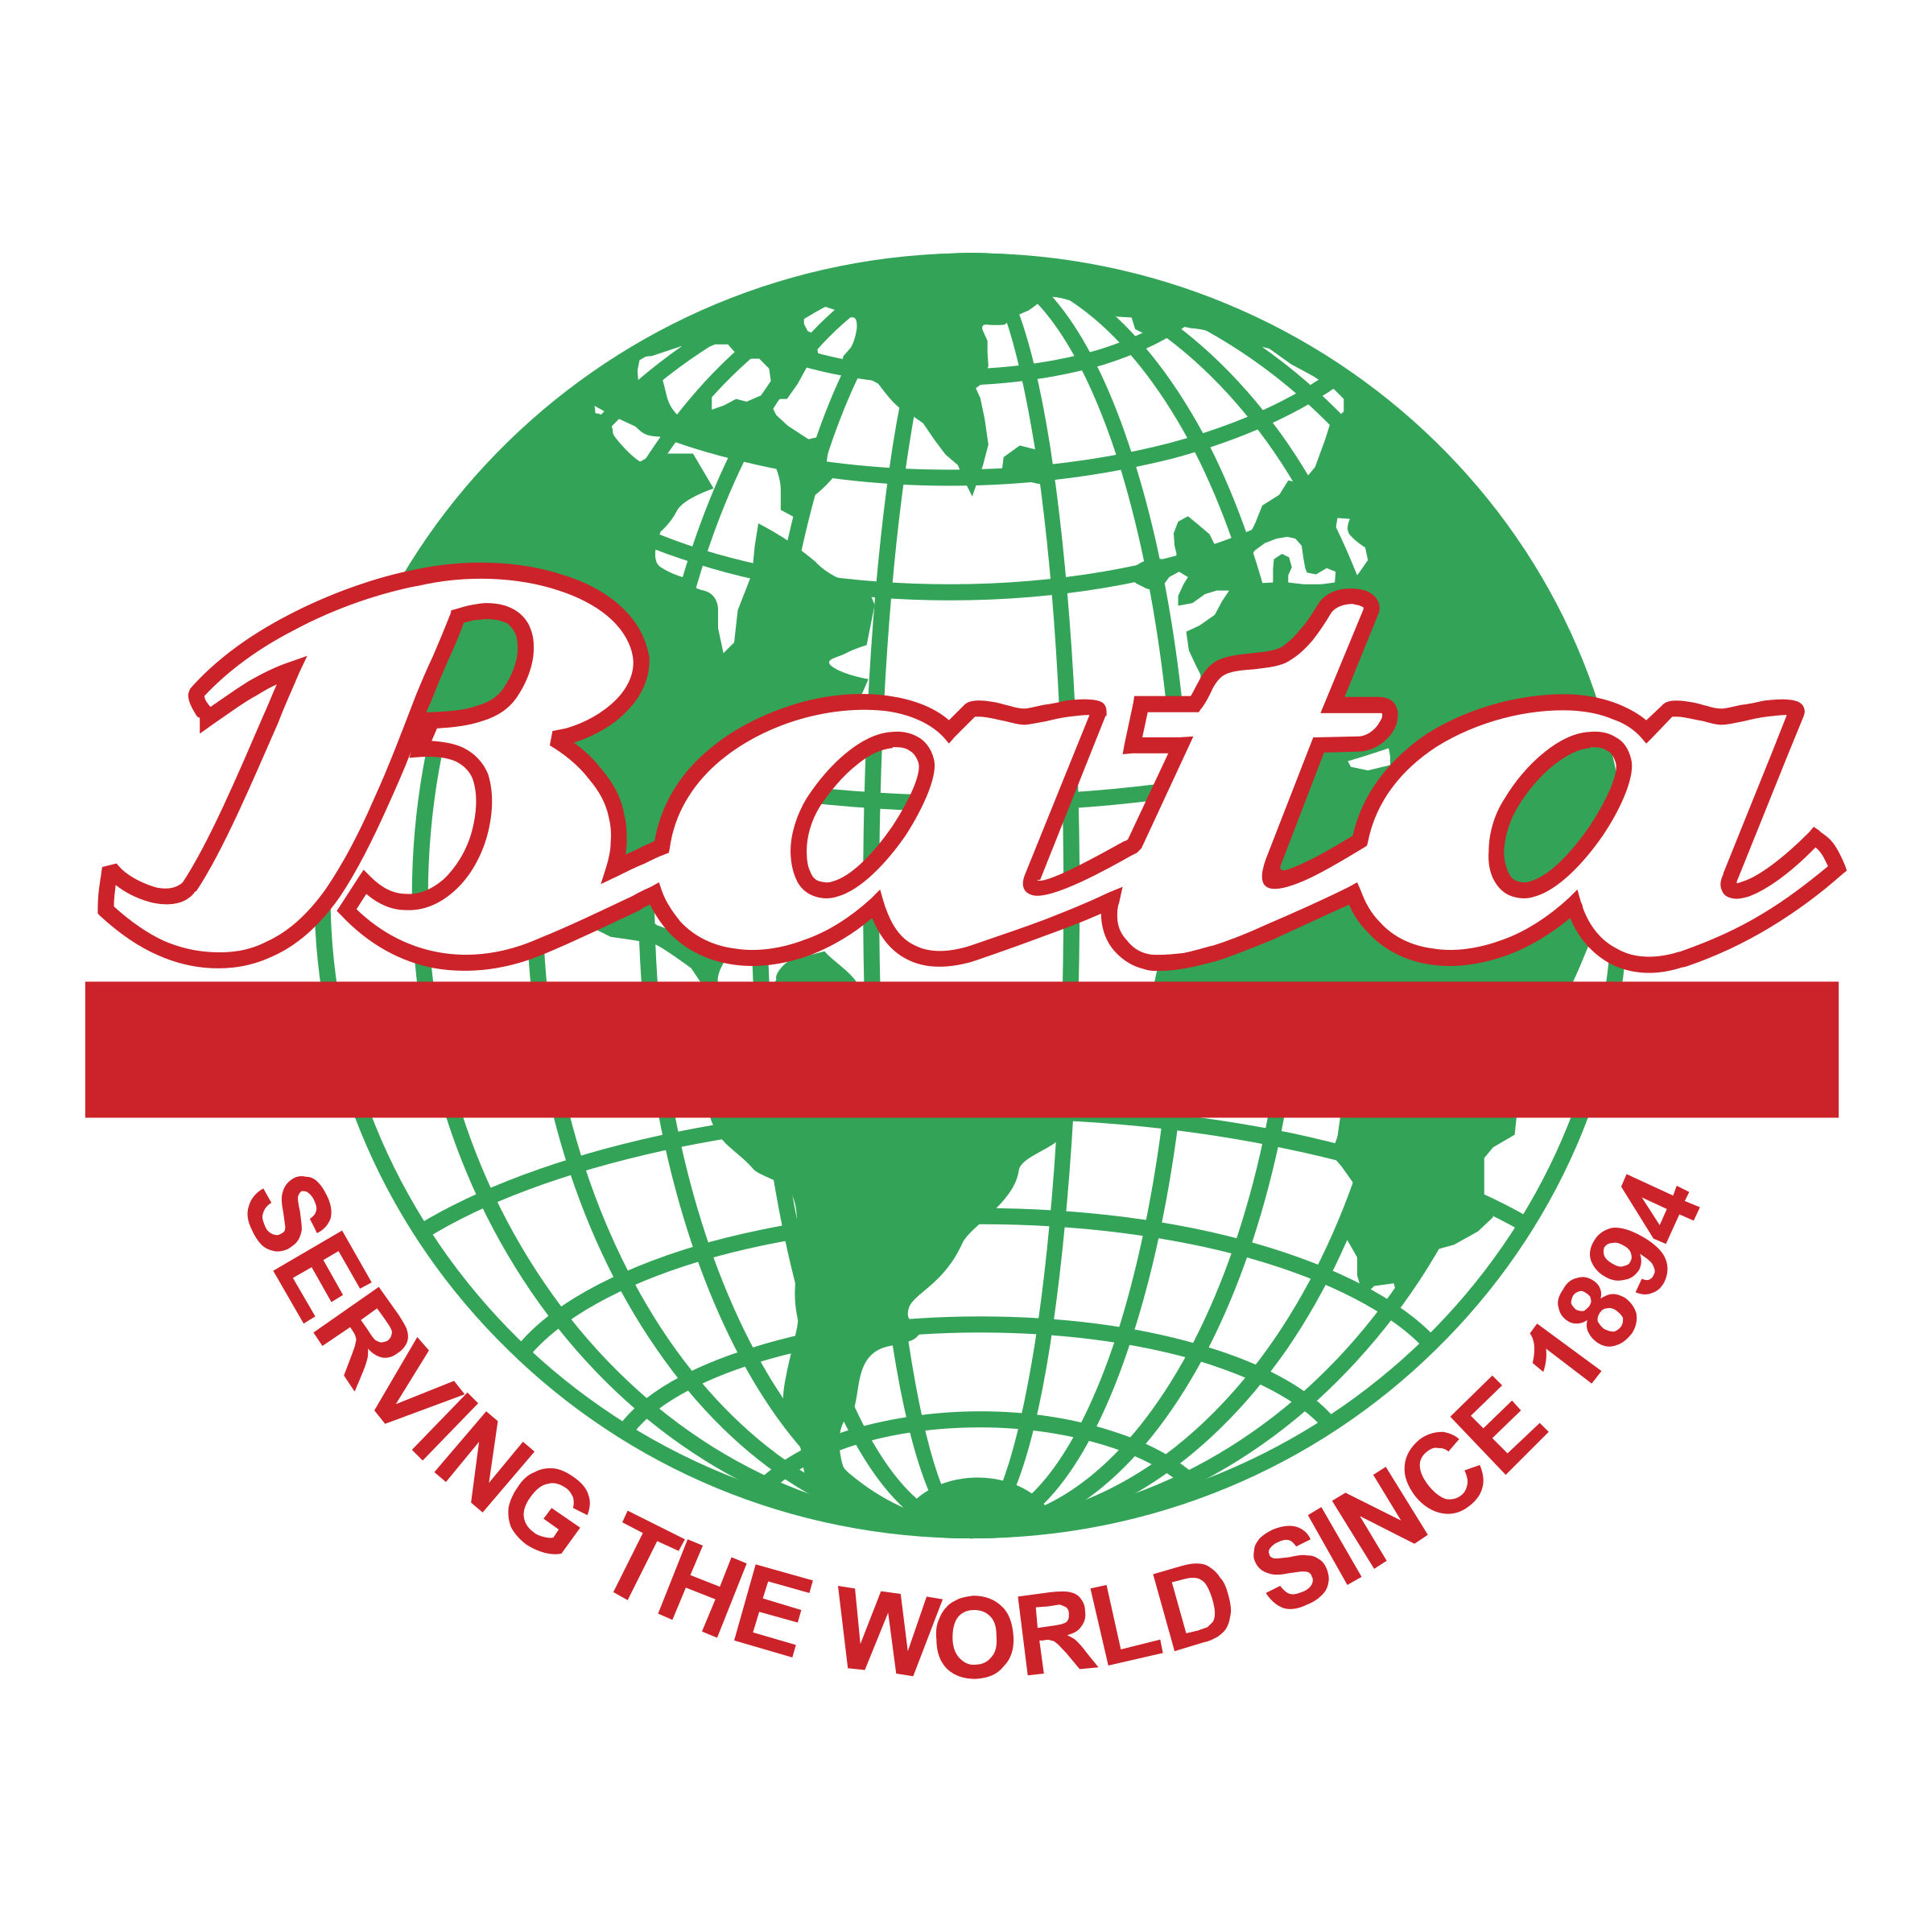 Bata Logo - Bata Logo PNG Transparent & SVG Vector - Freebie Supply